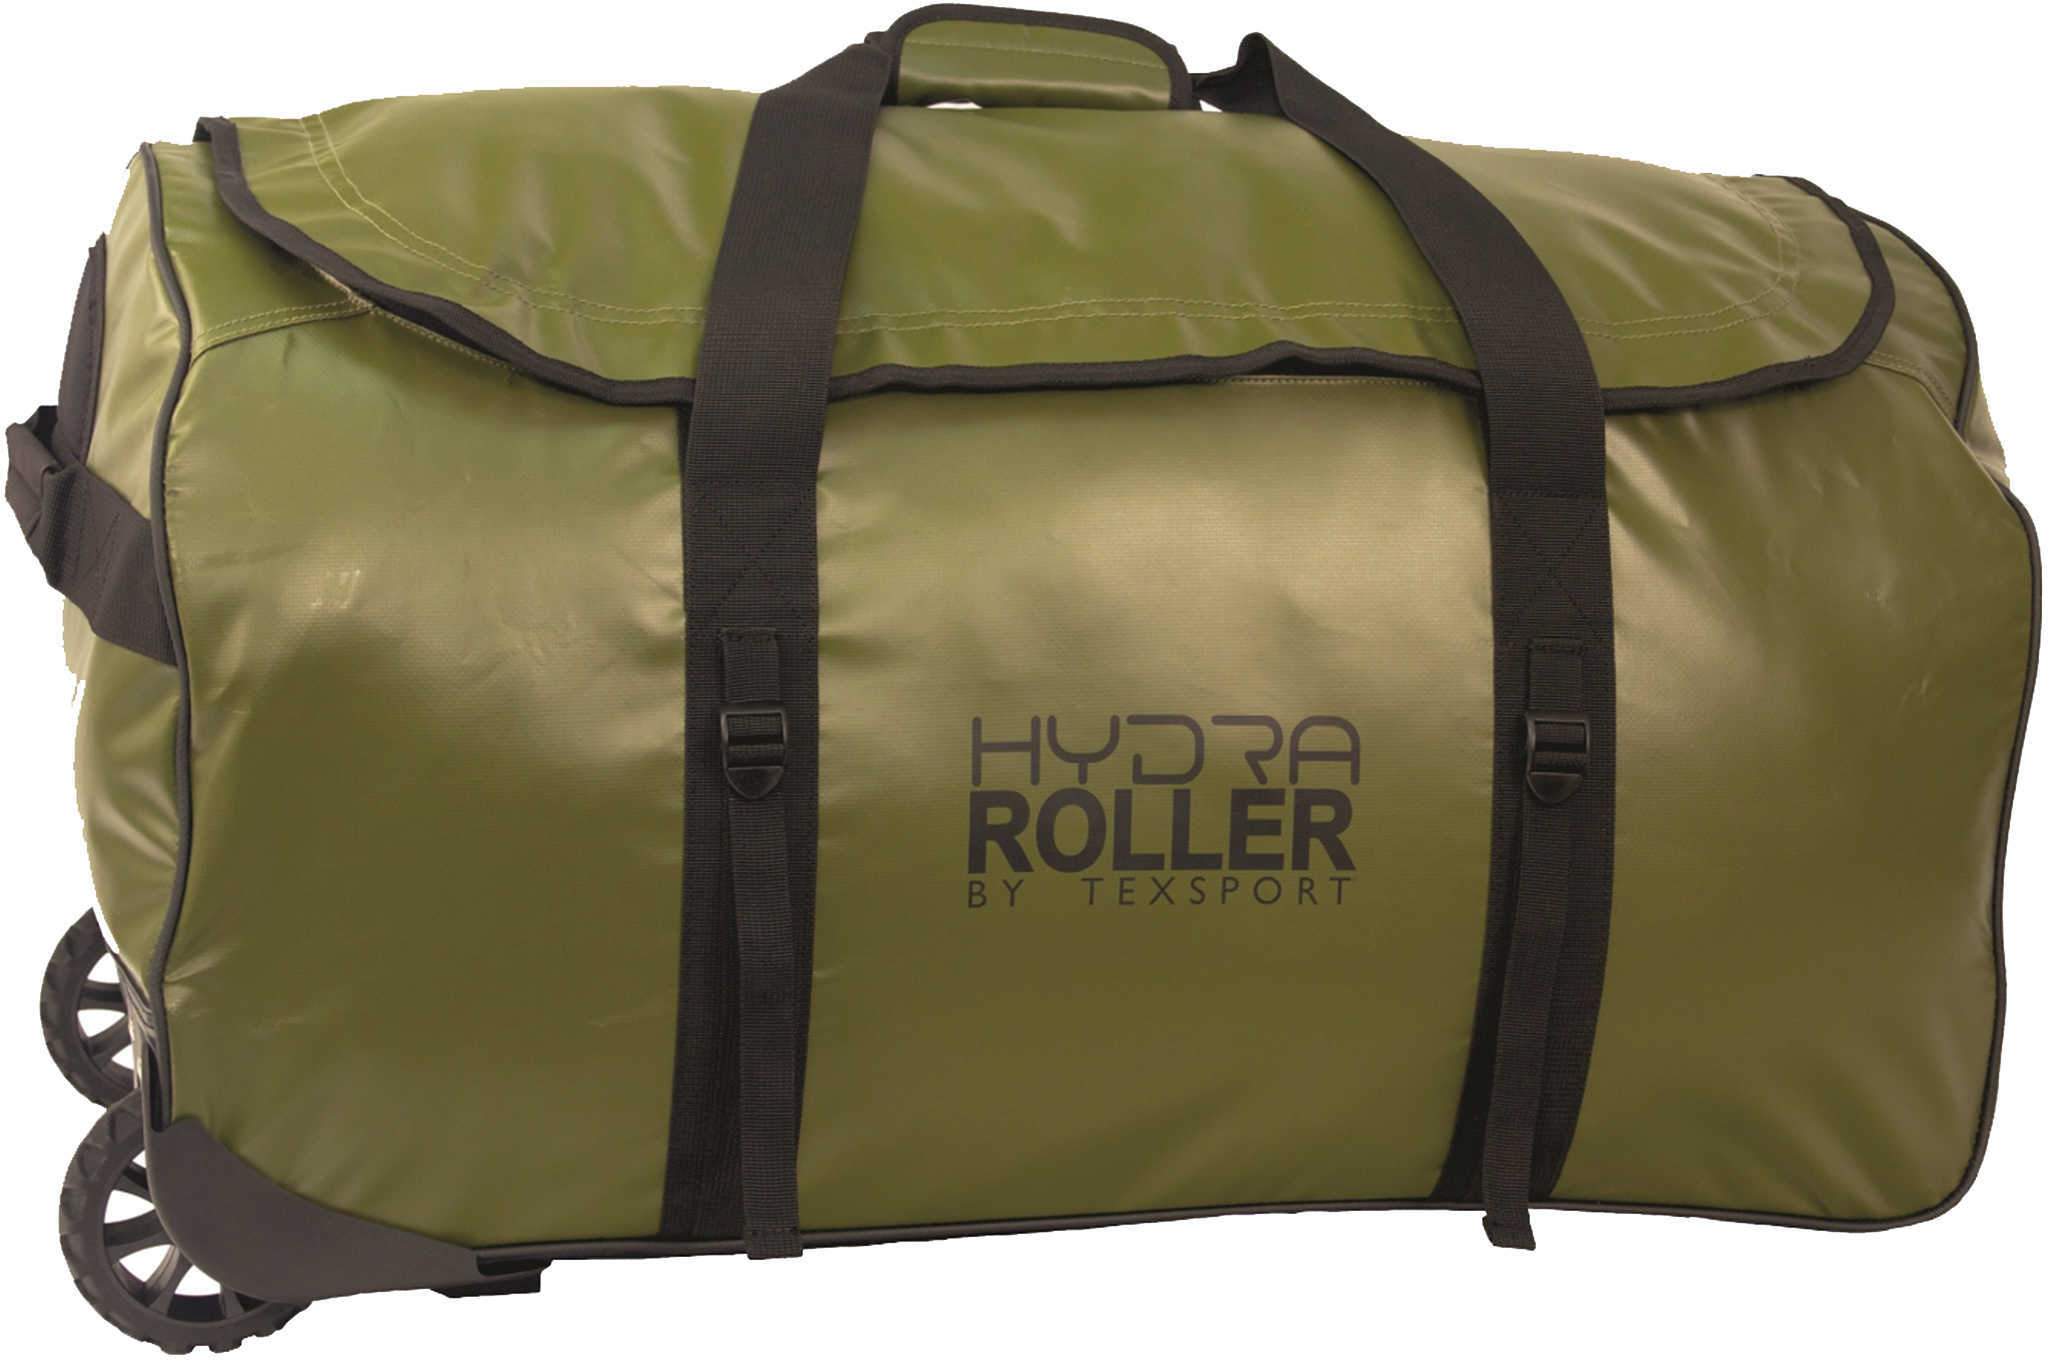 Texsport Hydra Roller - Army Green - 29inX15.75inX15.75in